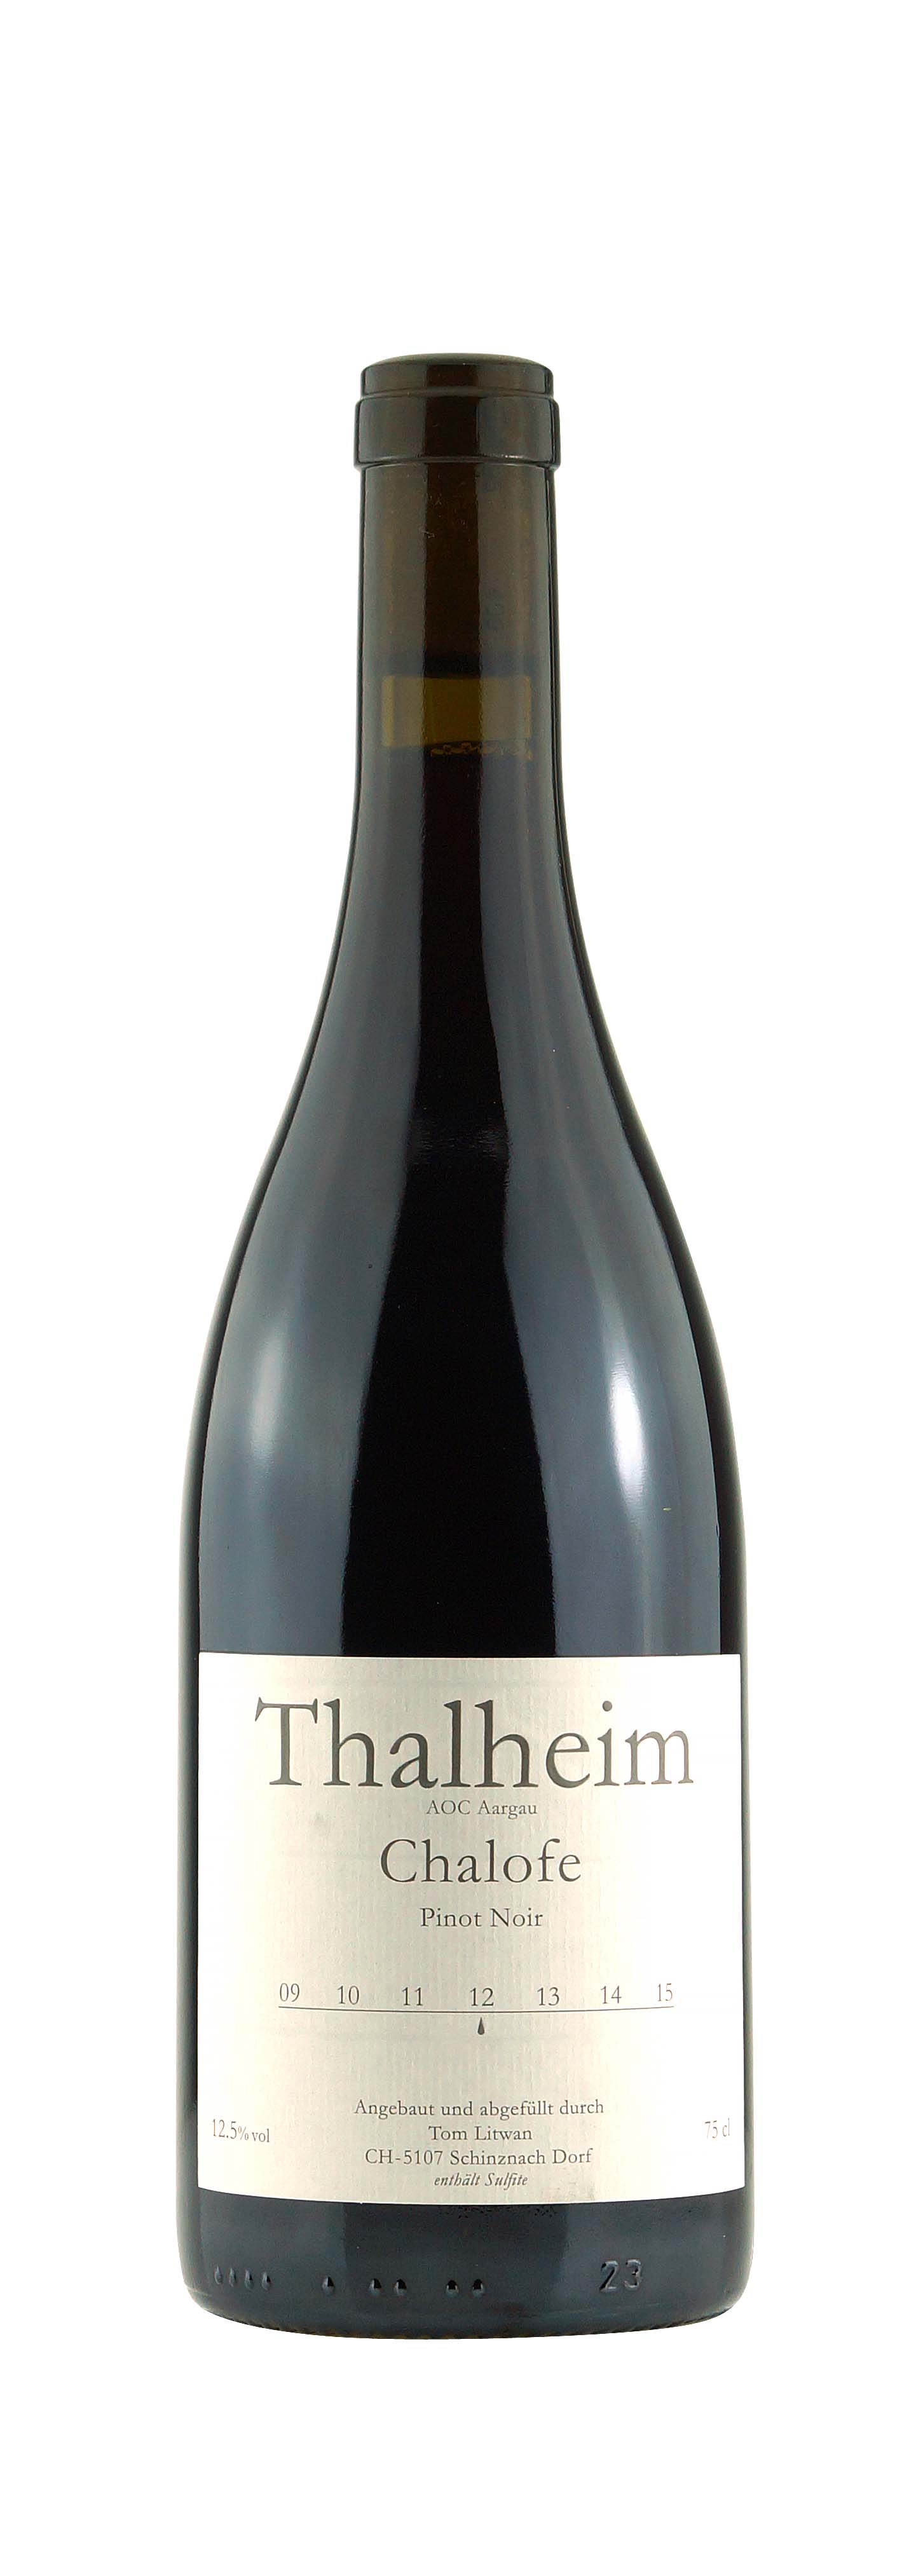 Aargau AOC Thalheim Pinot Noir Chalofe 2012